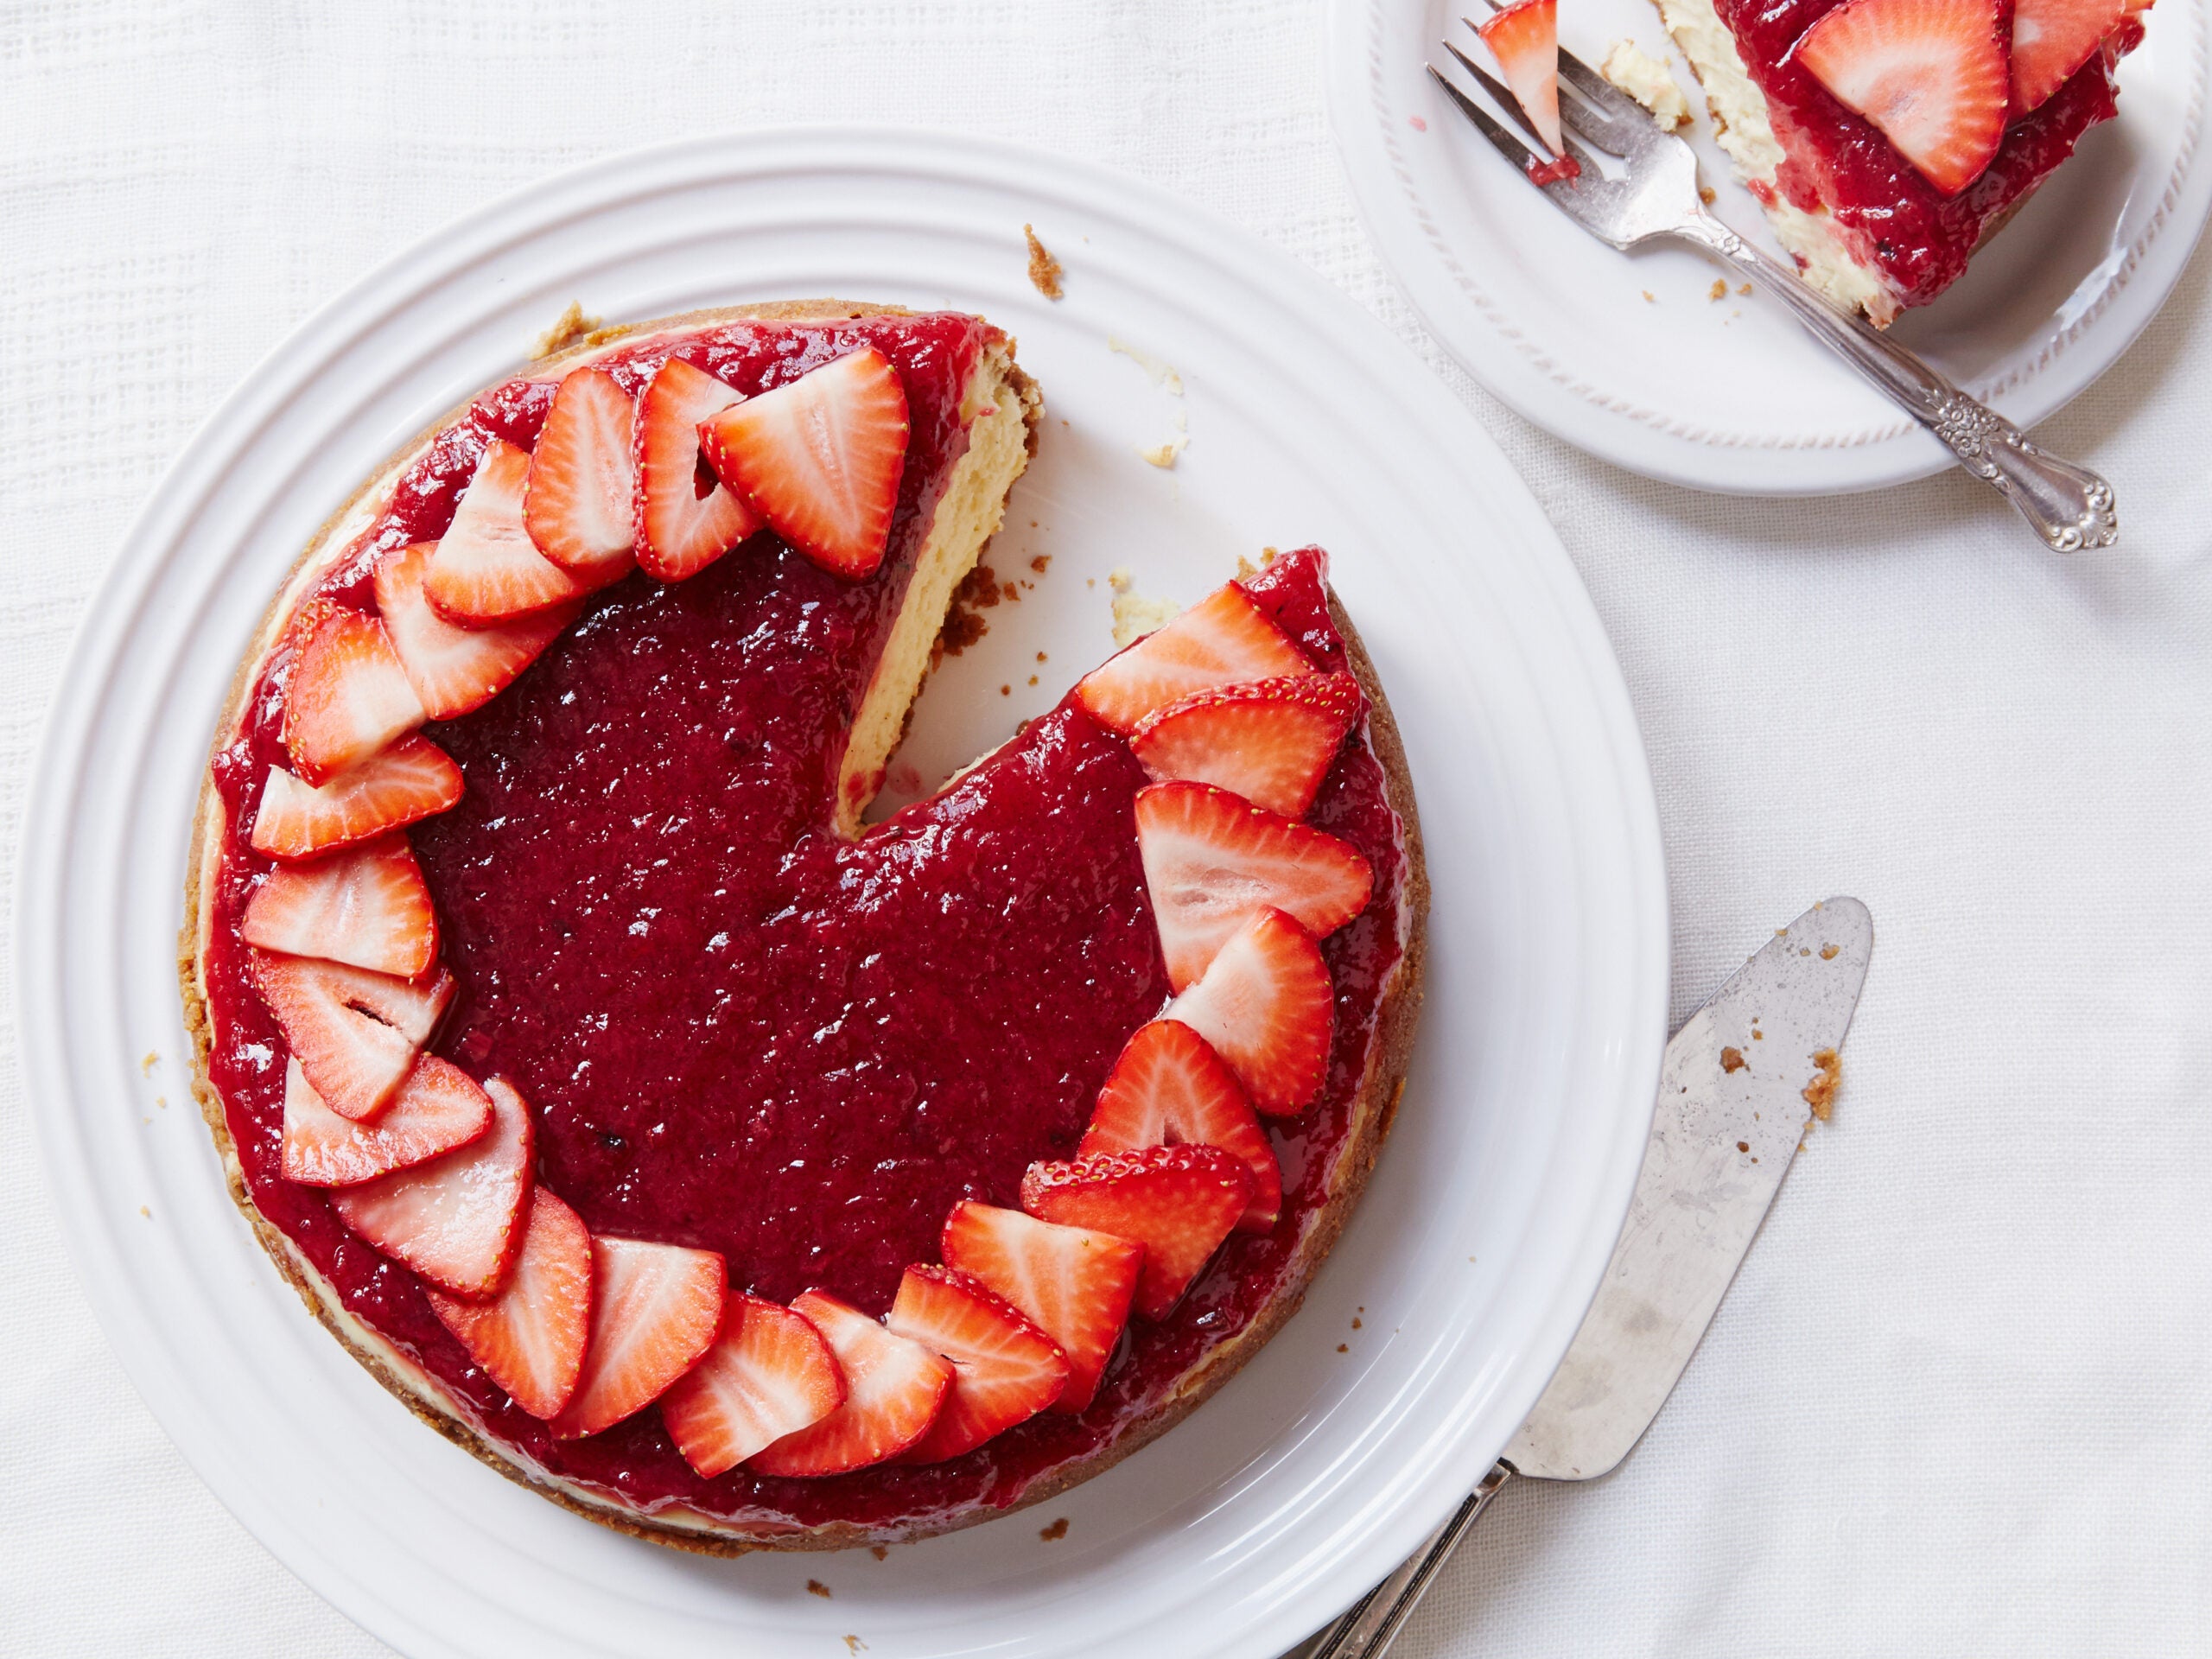 Cheesecake with Charred Rhubarb and Sliced Strawberries